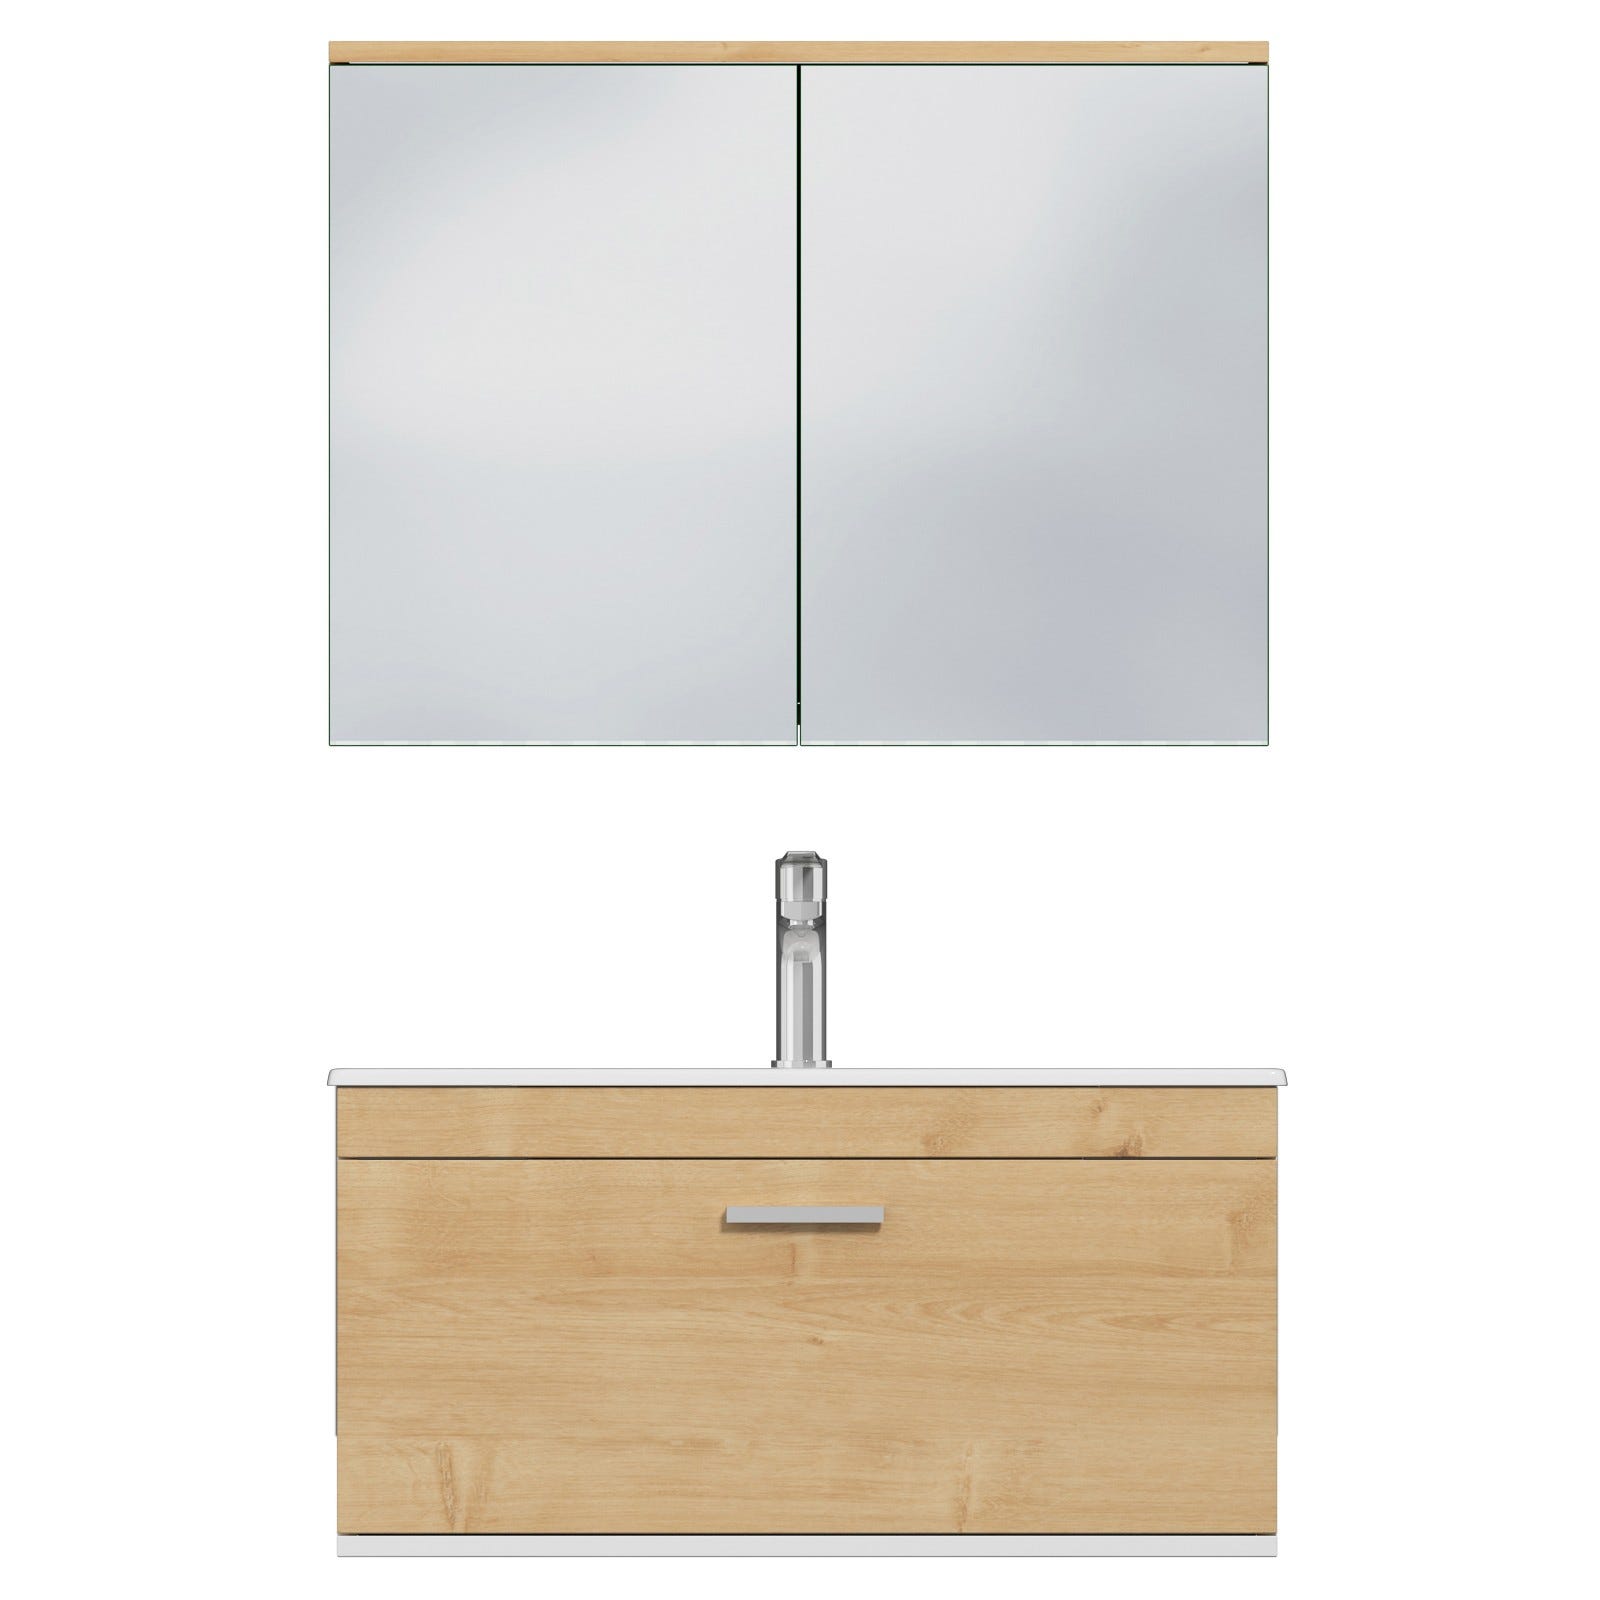 RUBITE Meuble salle de bain simple vasque 1 tiroir chêne clair largeur 80 cm + miroir armoire 4